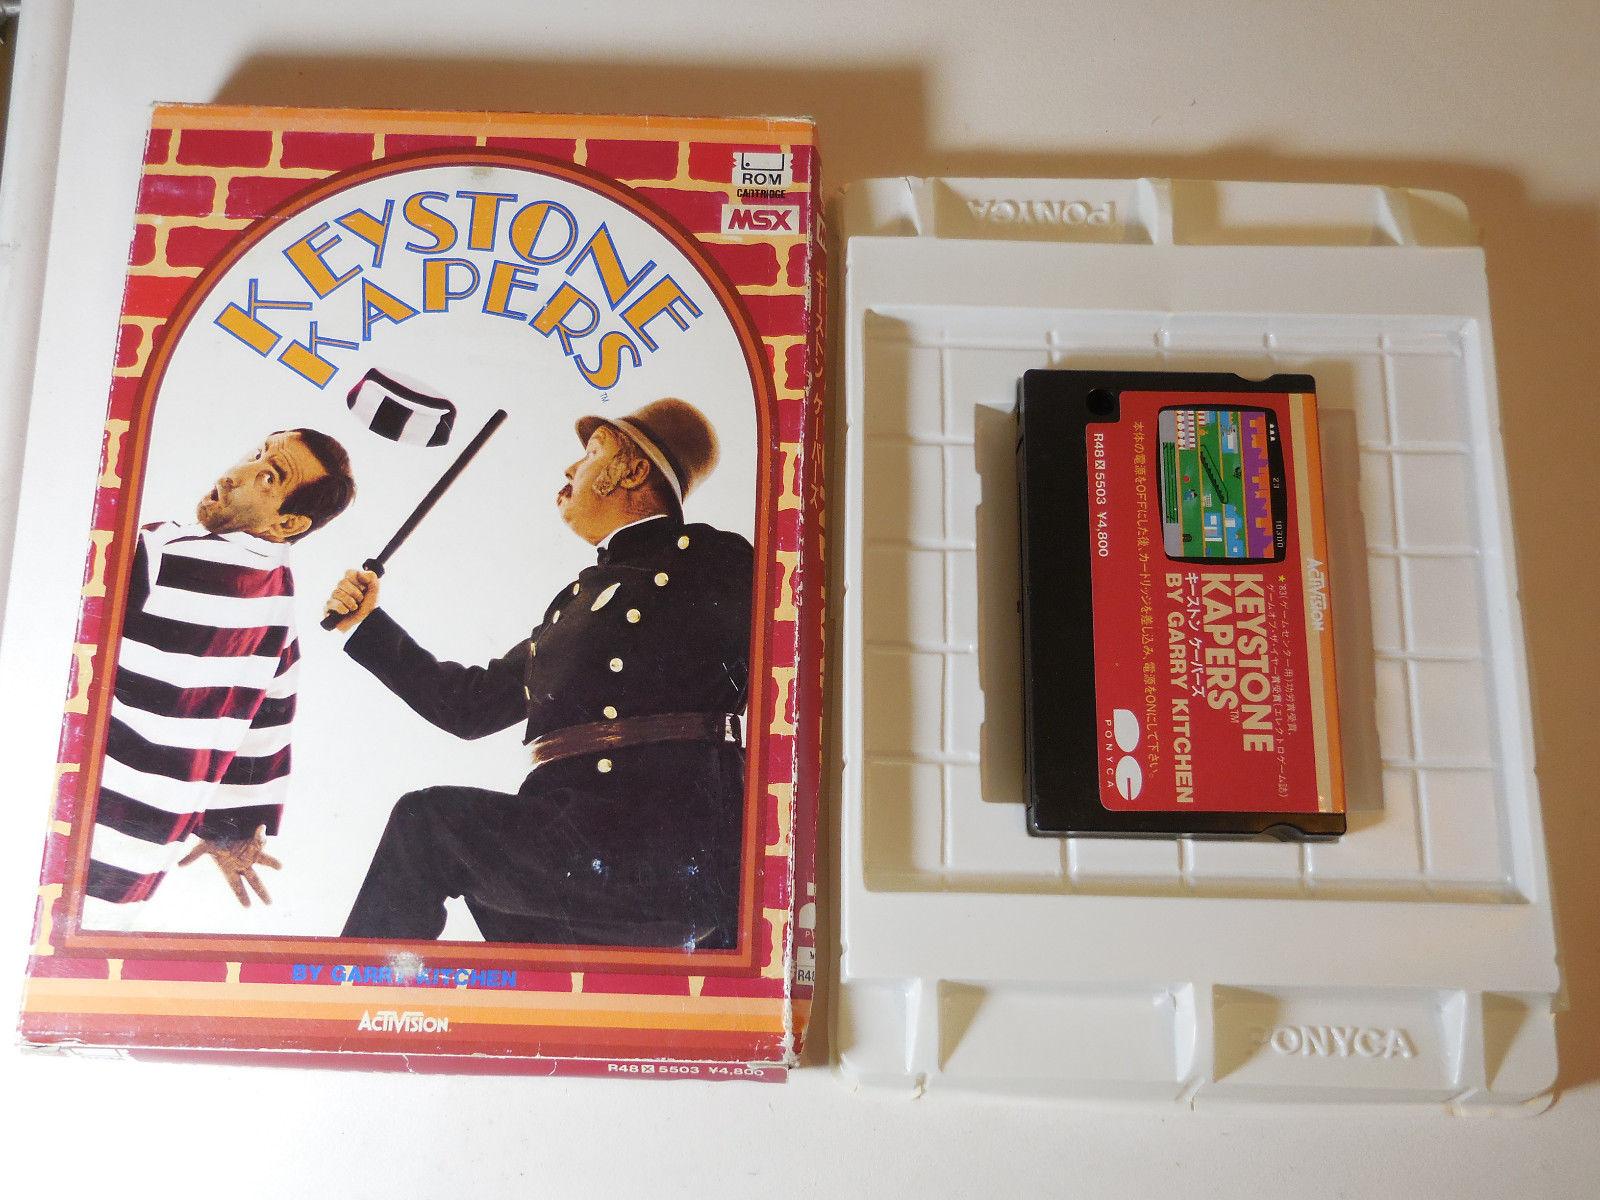 Keystone Kapers, Keystone Kapers was a 1983 game published …